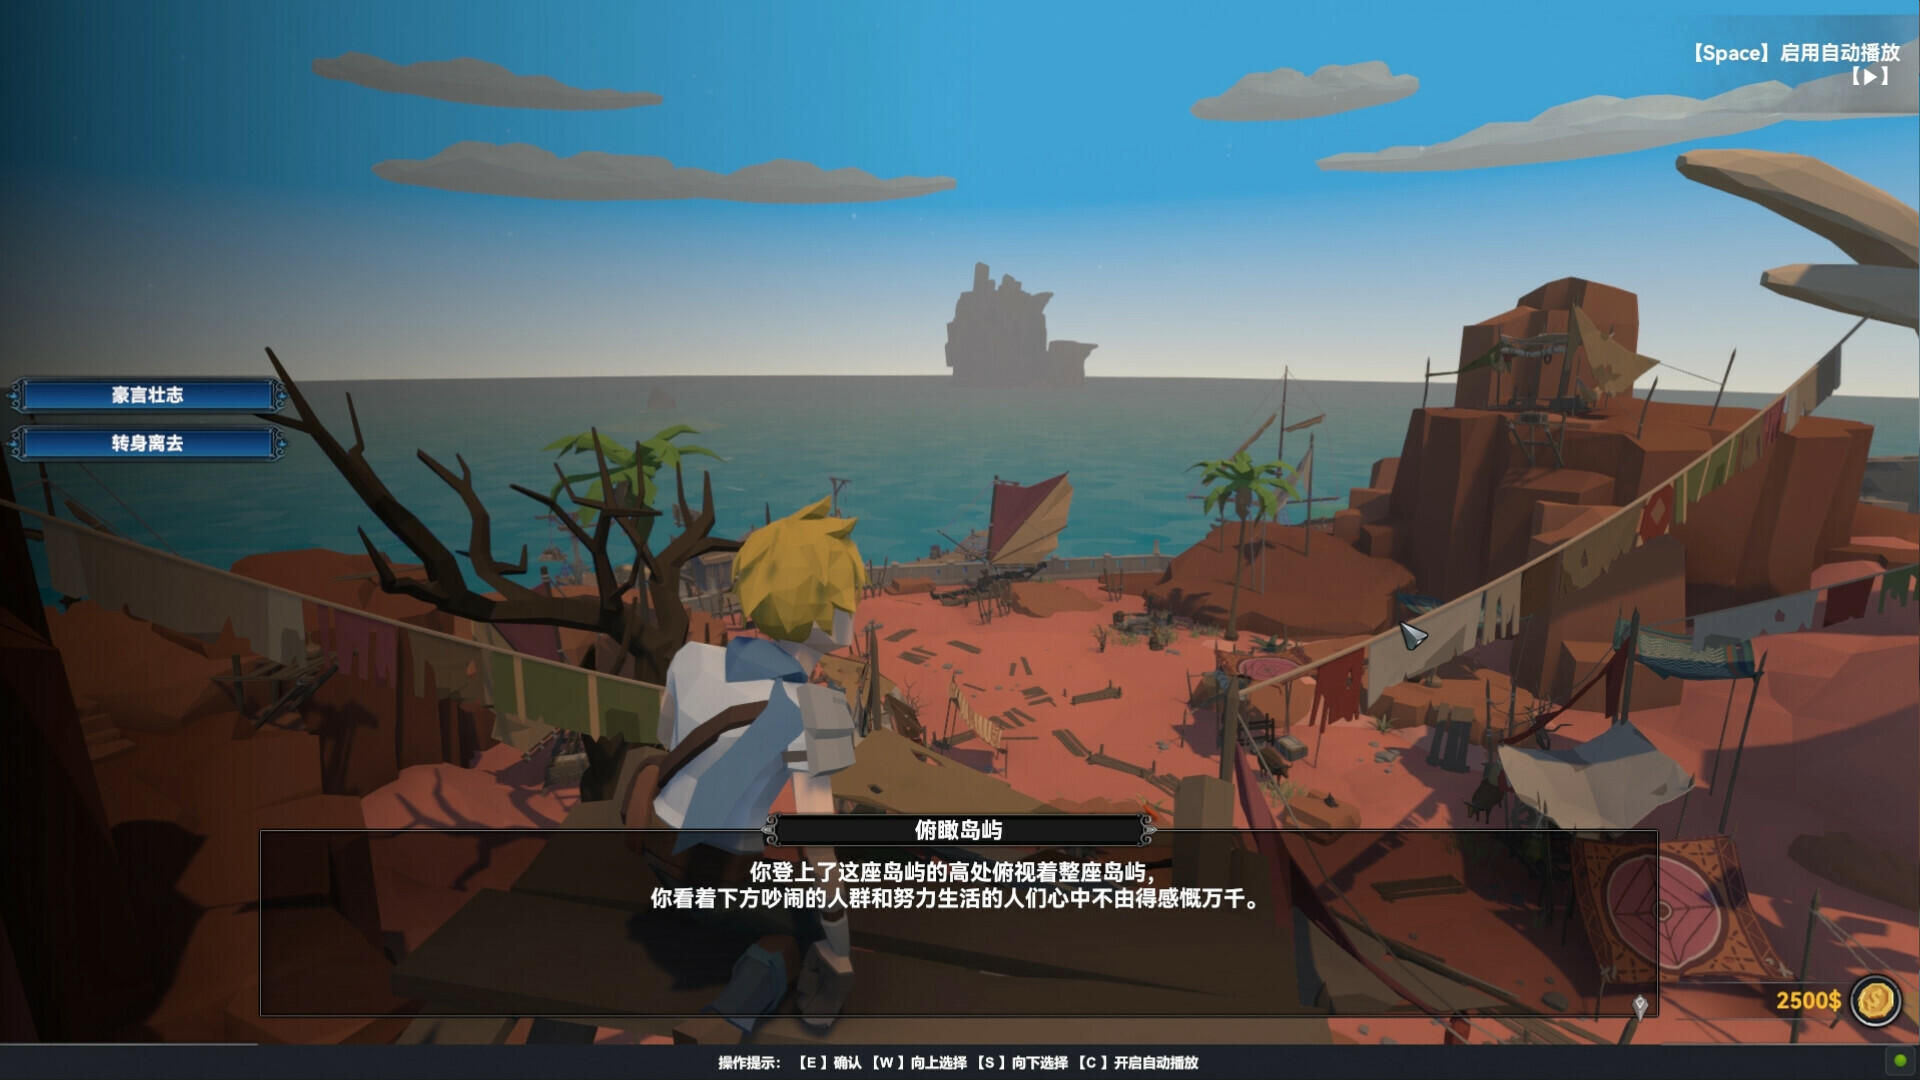 Screenshot 1 of Mysterious Voyage:Set sail 